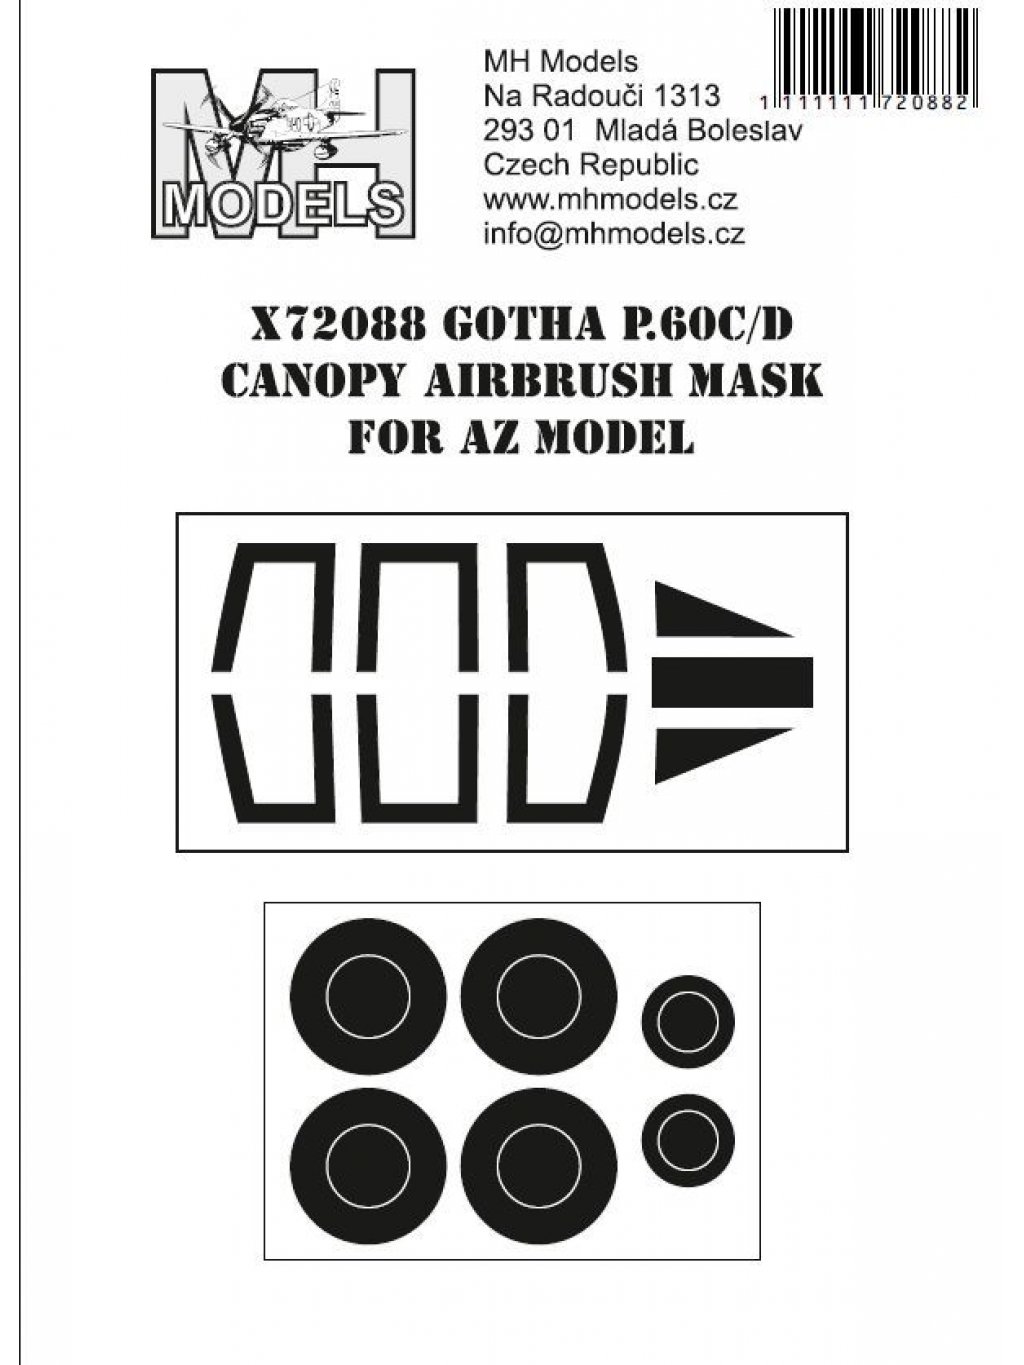 Gotha P.60C/D canopy airbrush mask for AZ Model